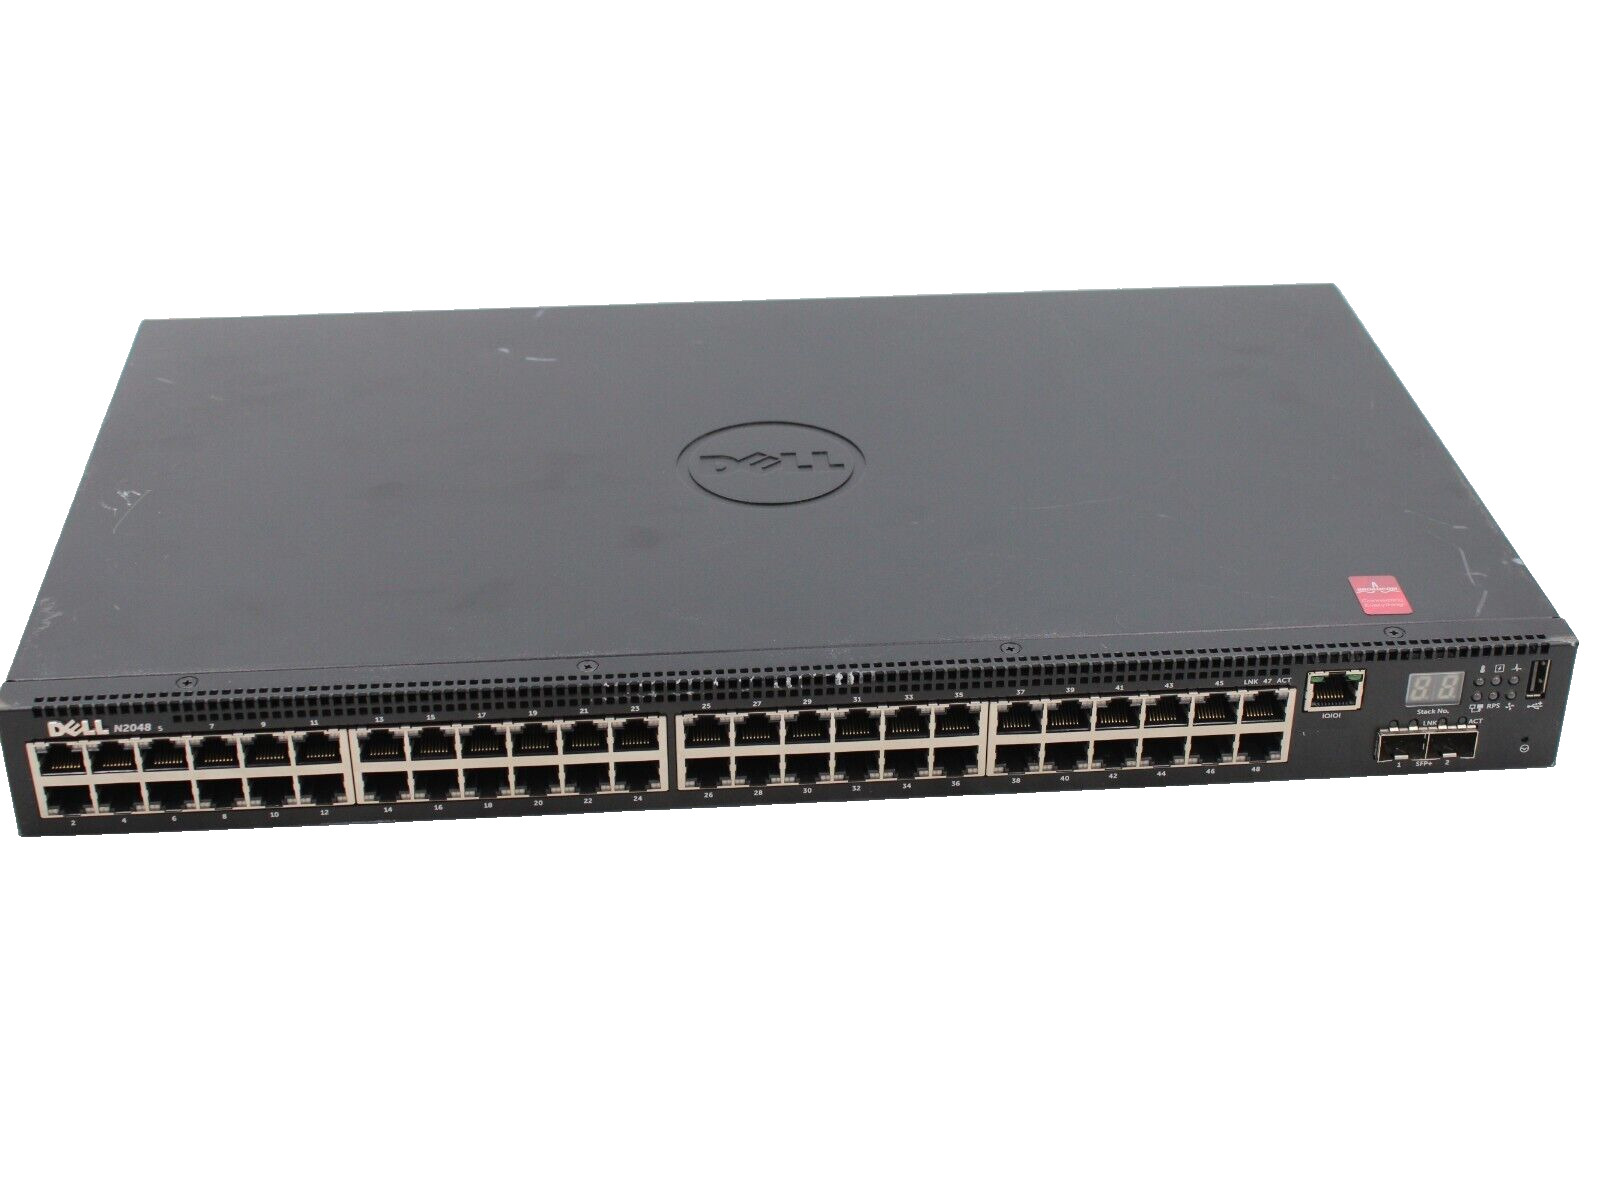 Dell N2048 48-Port Gigabit Rack Mountable Manged Ethernet Network Switch TESTED